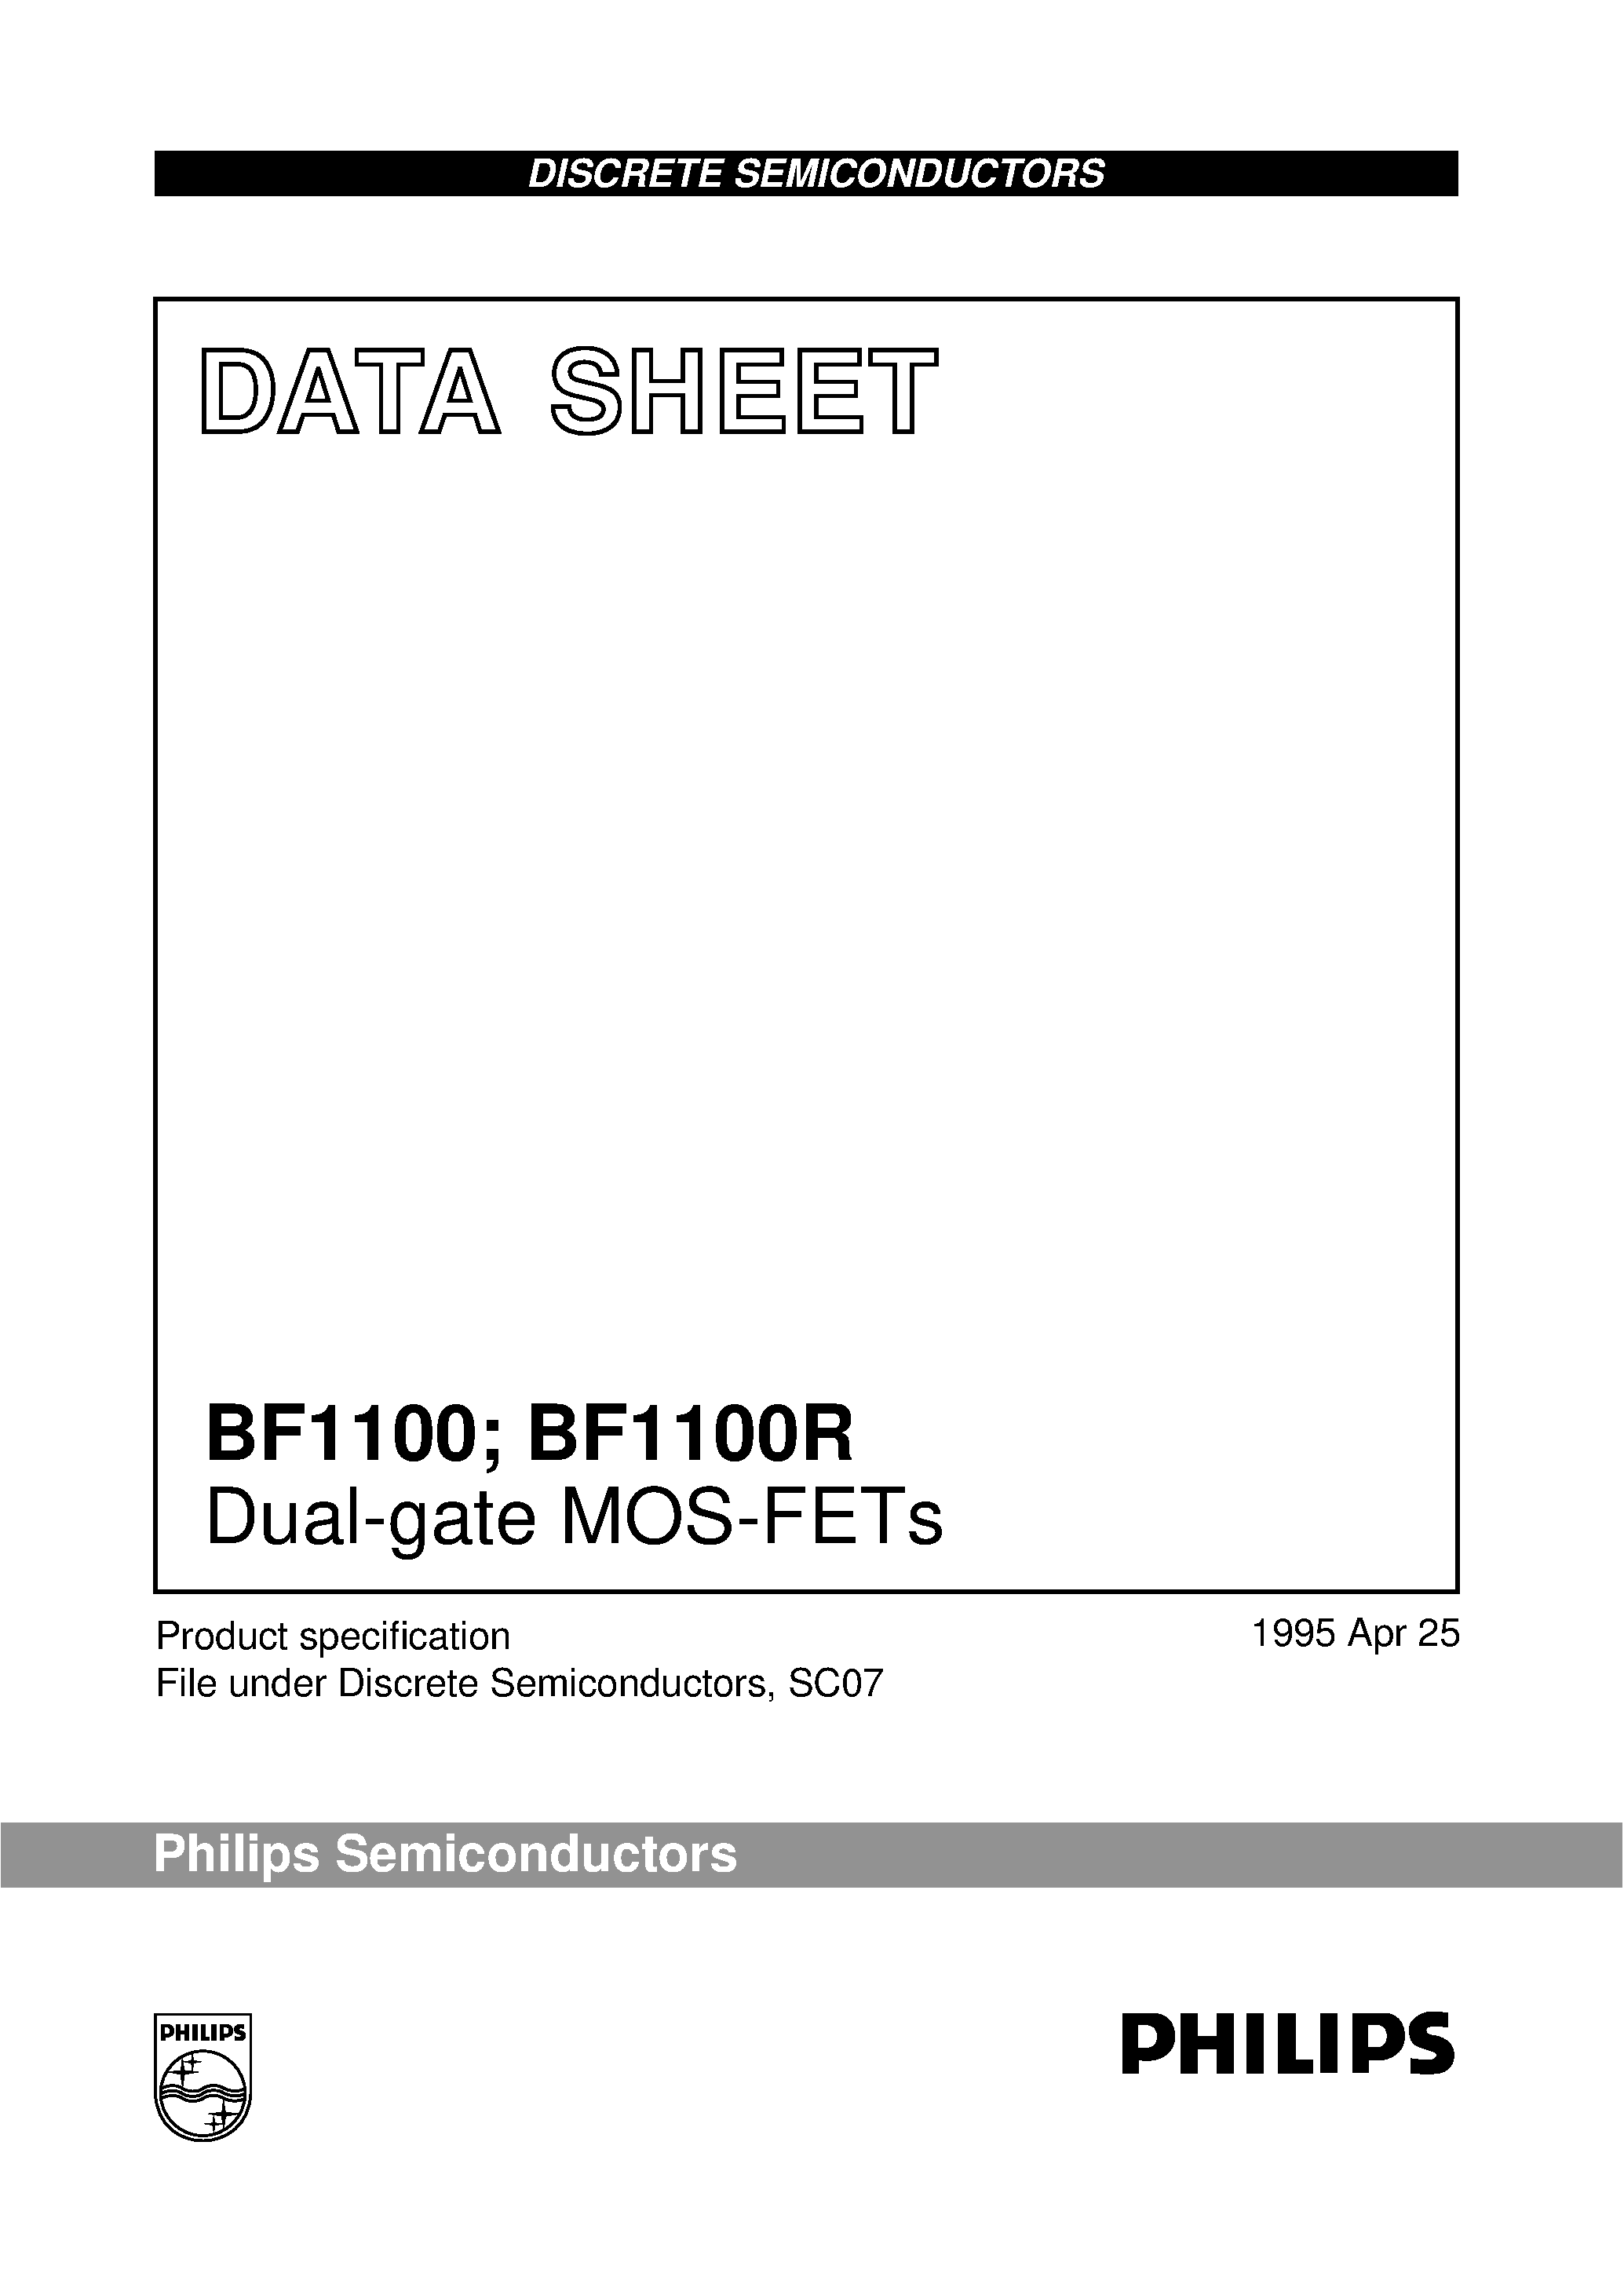 Даташит BF1100R - Dual-gate MOS-FETs страница 1